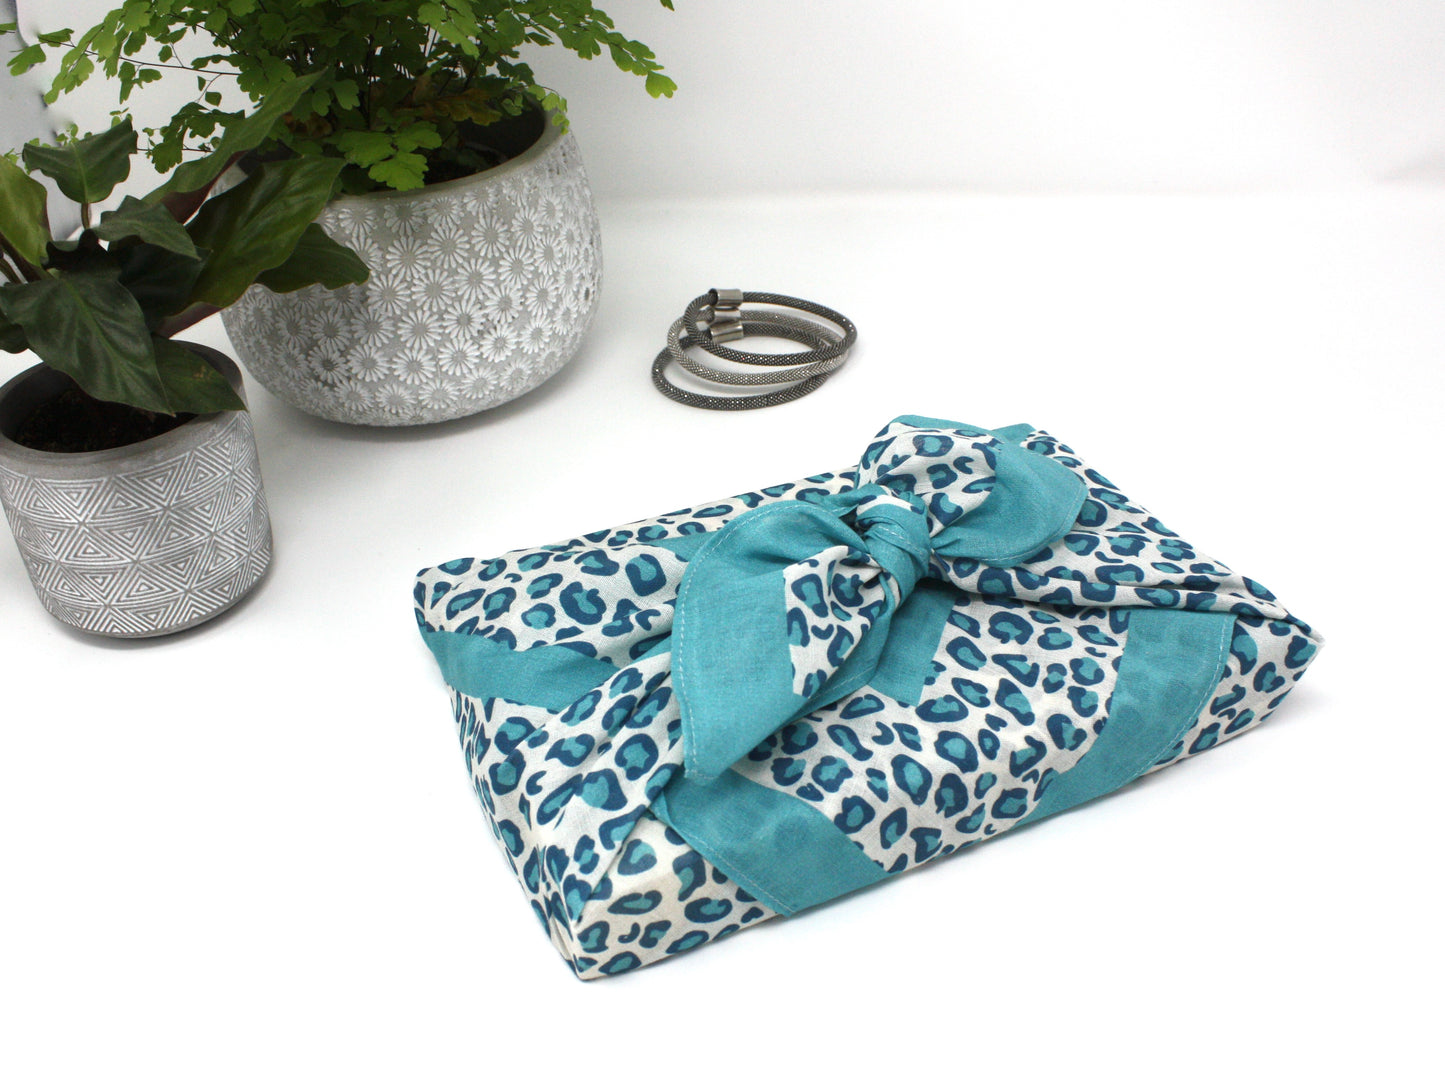 Furoshiki fabric gift wrap 53cm - Leopard natural